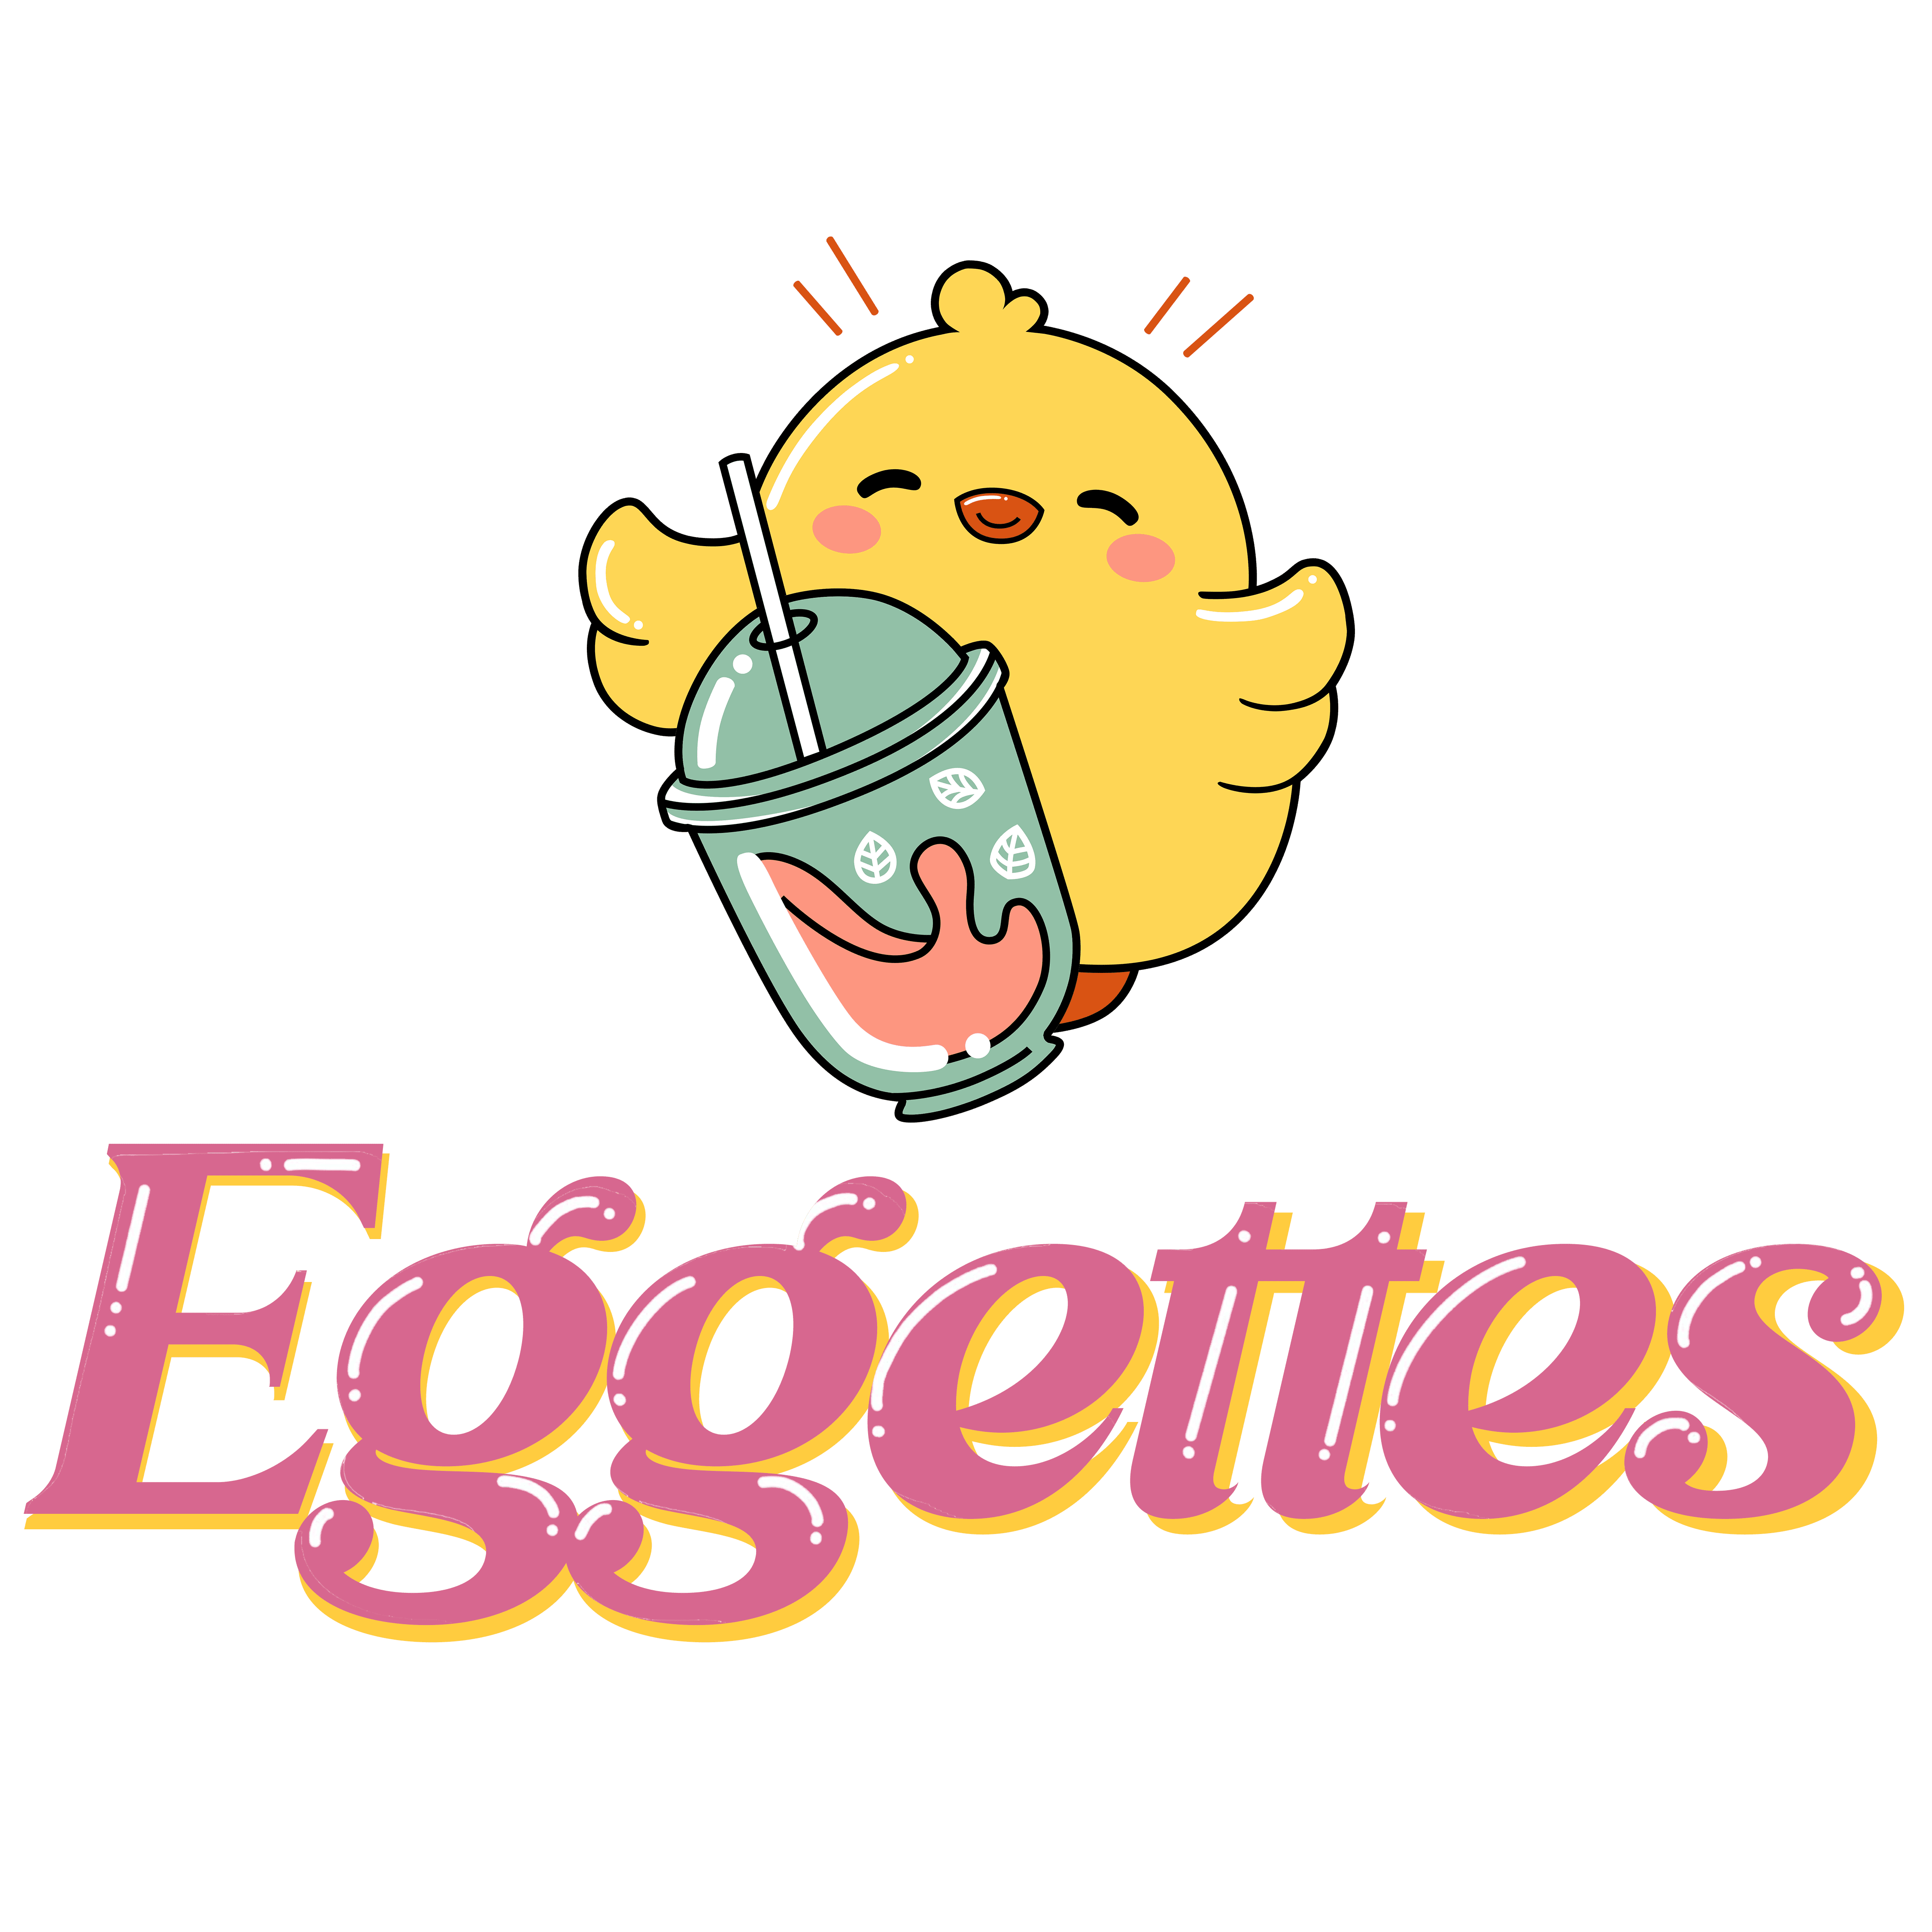 Eggettes